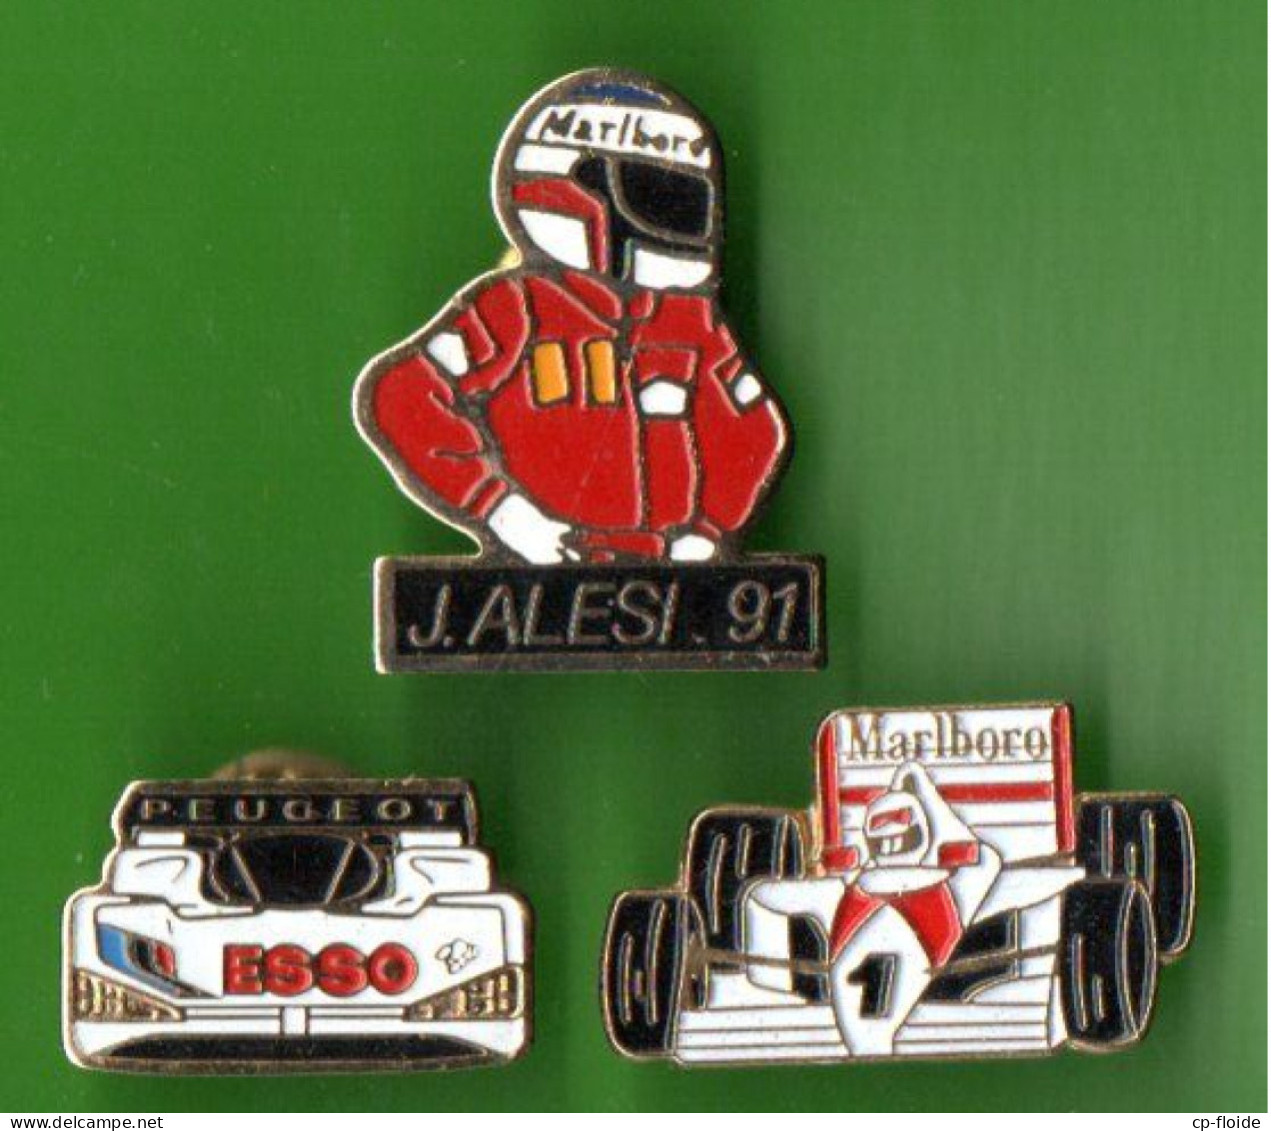 PIN'S . SPORT AUTOMOBILE . " JEAN ALÉSI 1991 . FORMULE 1 MALBORO . PEUGEOT 905 ESSO " . LOT DE 3 PIN'S - Réf. N°106PNS - - Car Racing - F1